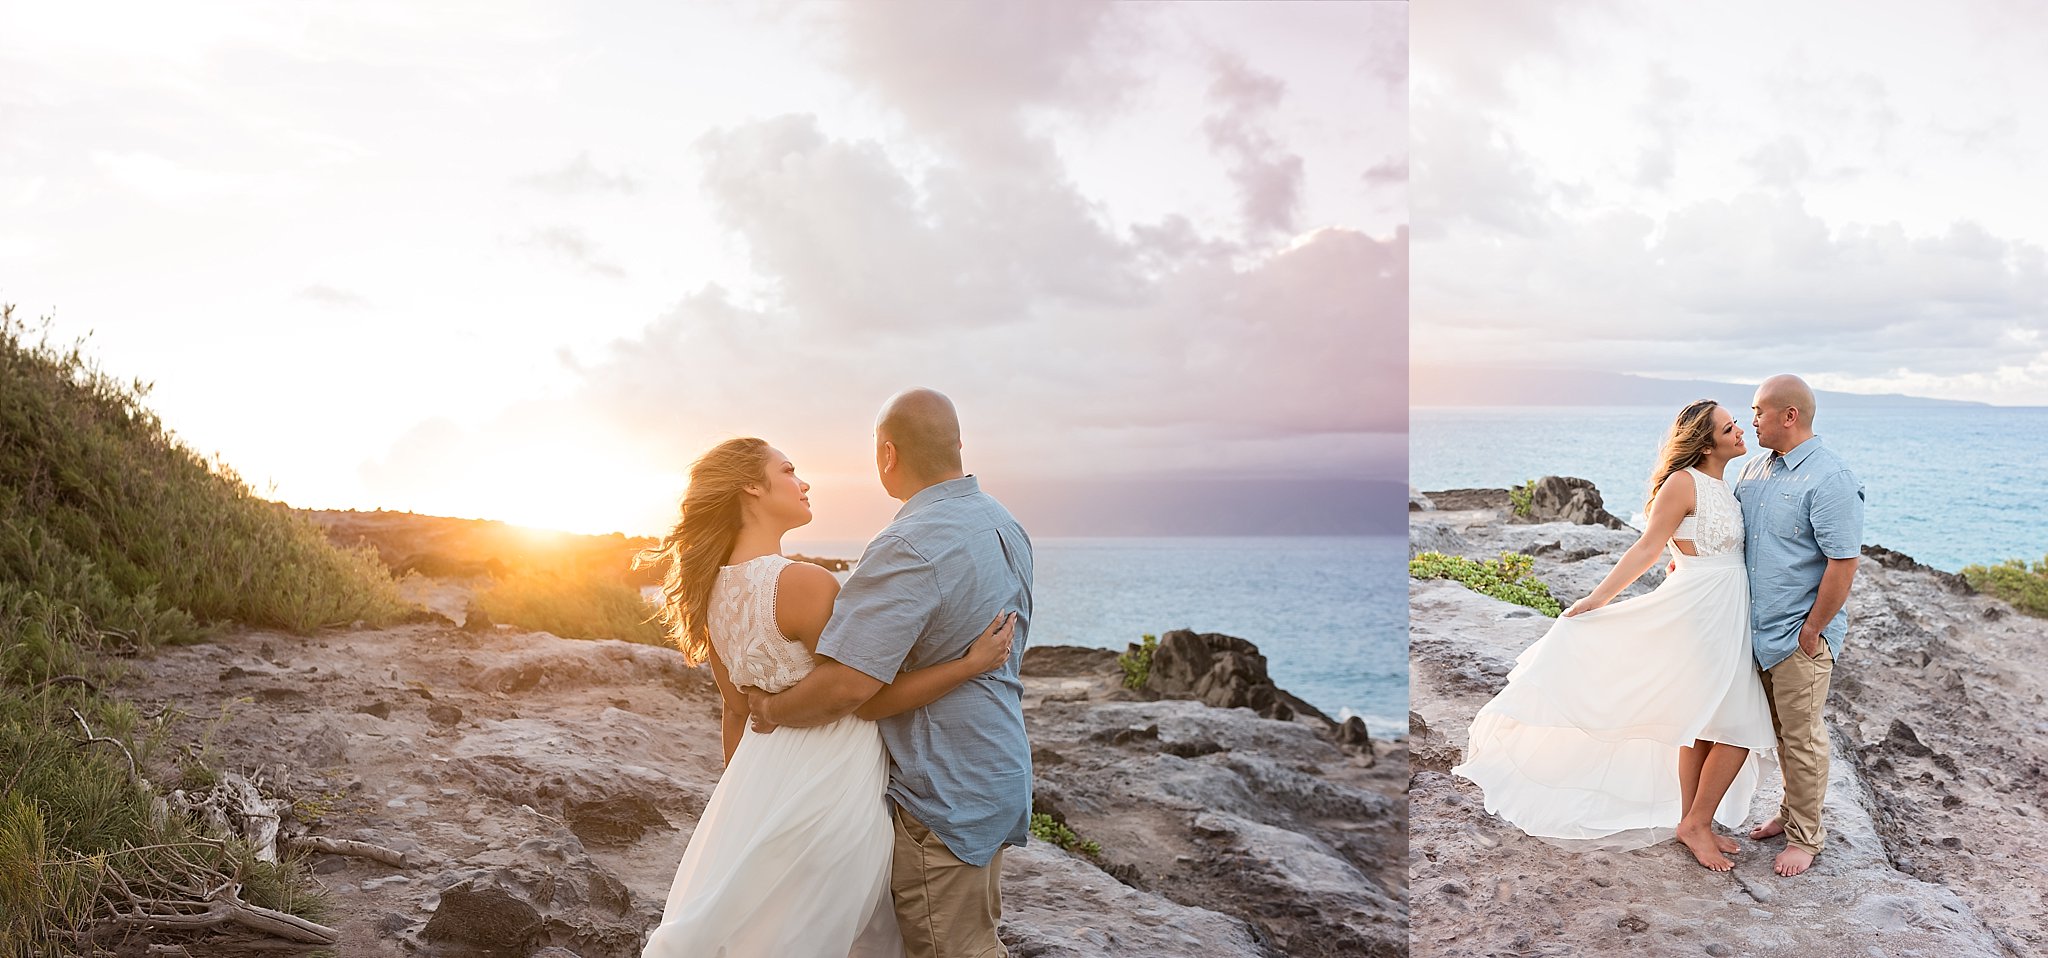 Maui Engagement Photographer, Maui Anniversary Portraits, Maui Photographer, Maui Photographers, Best Maui Photographer, Maui Family Photographer